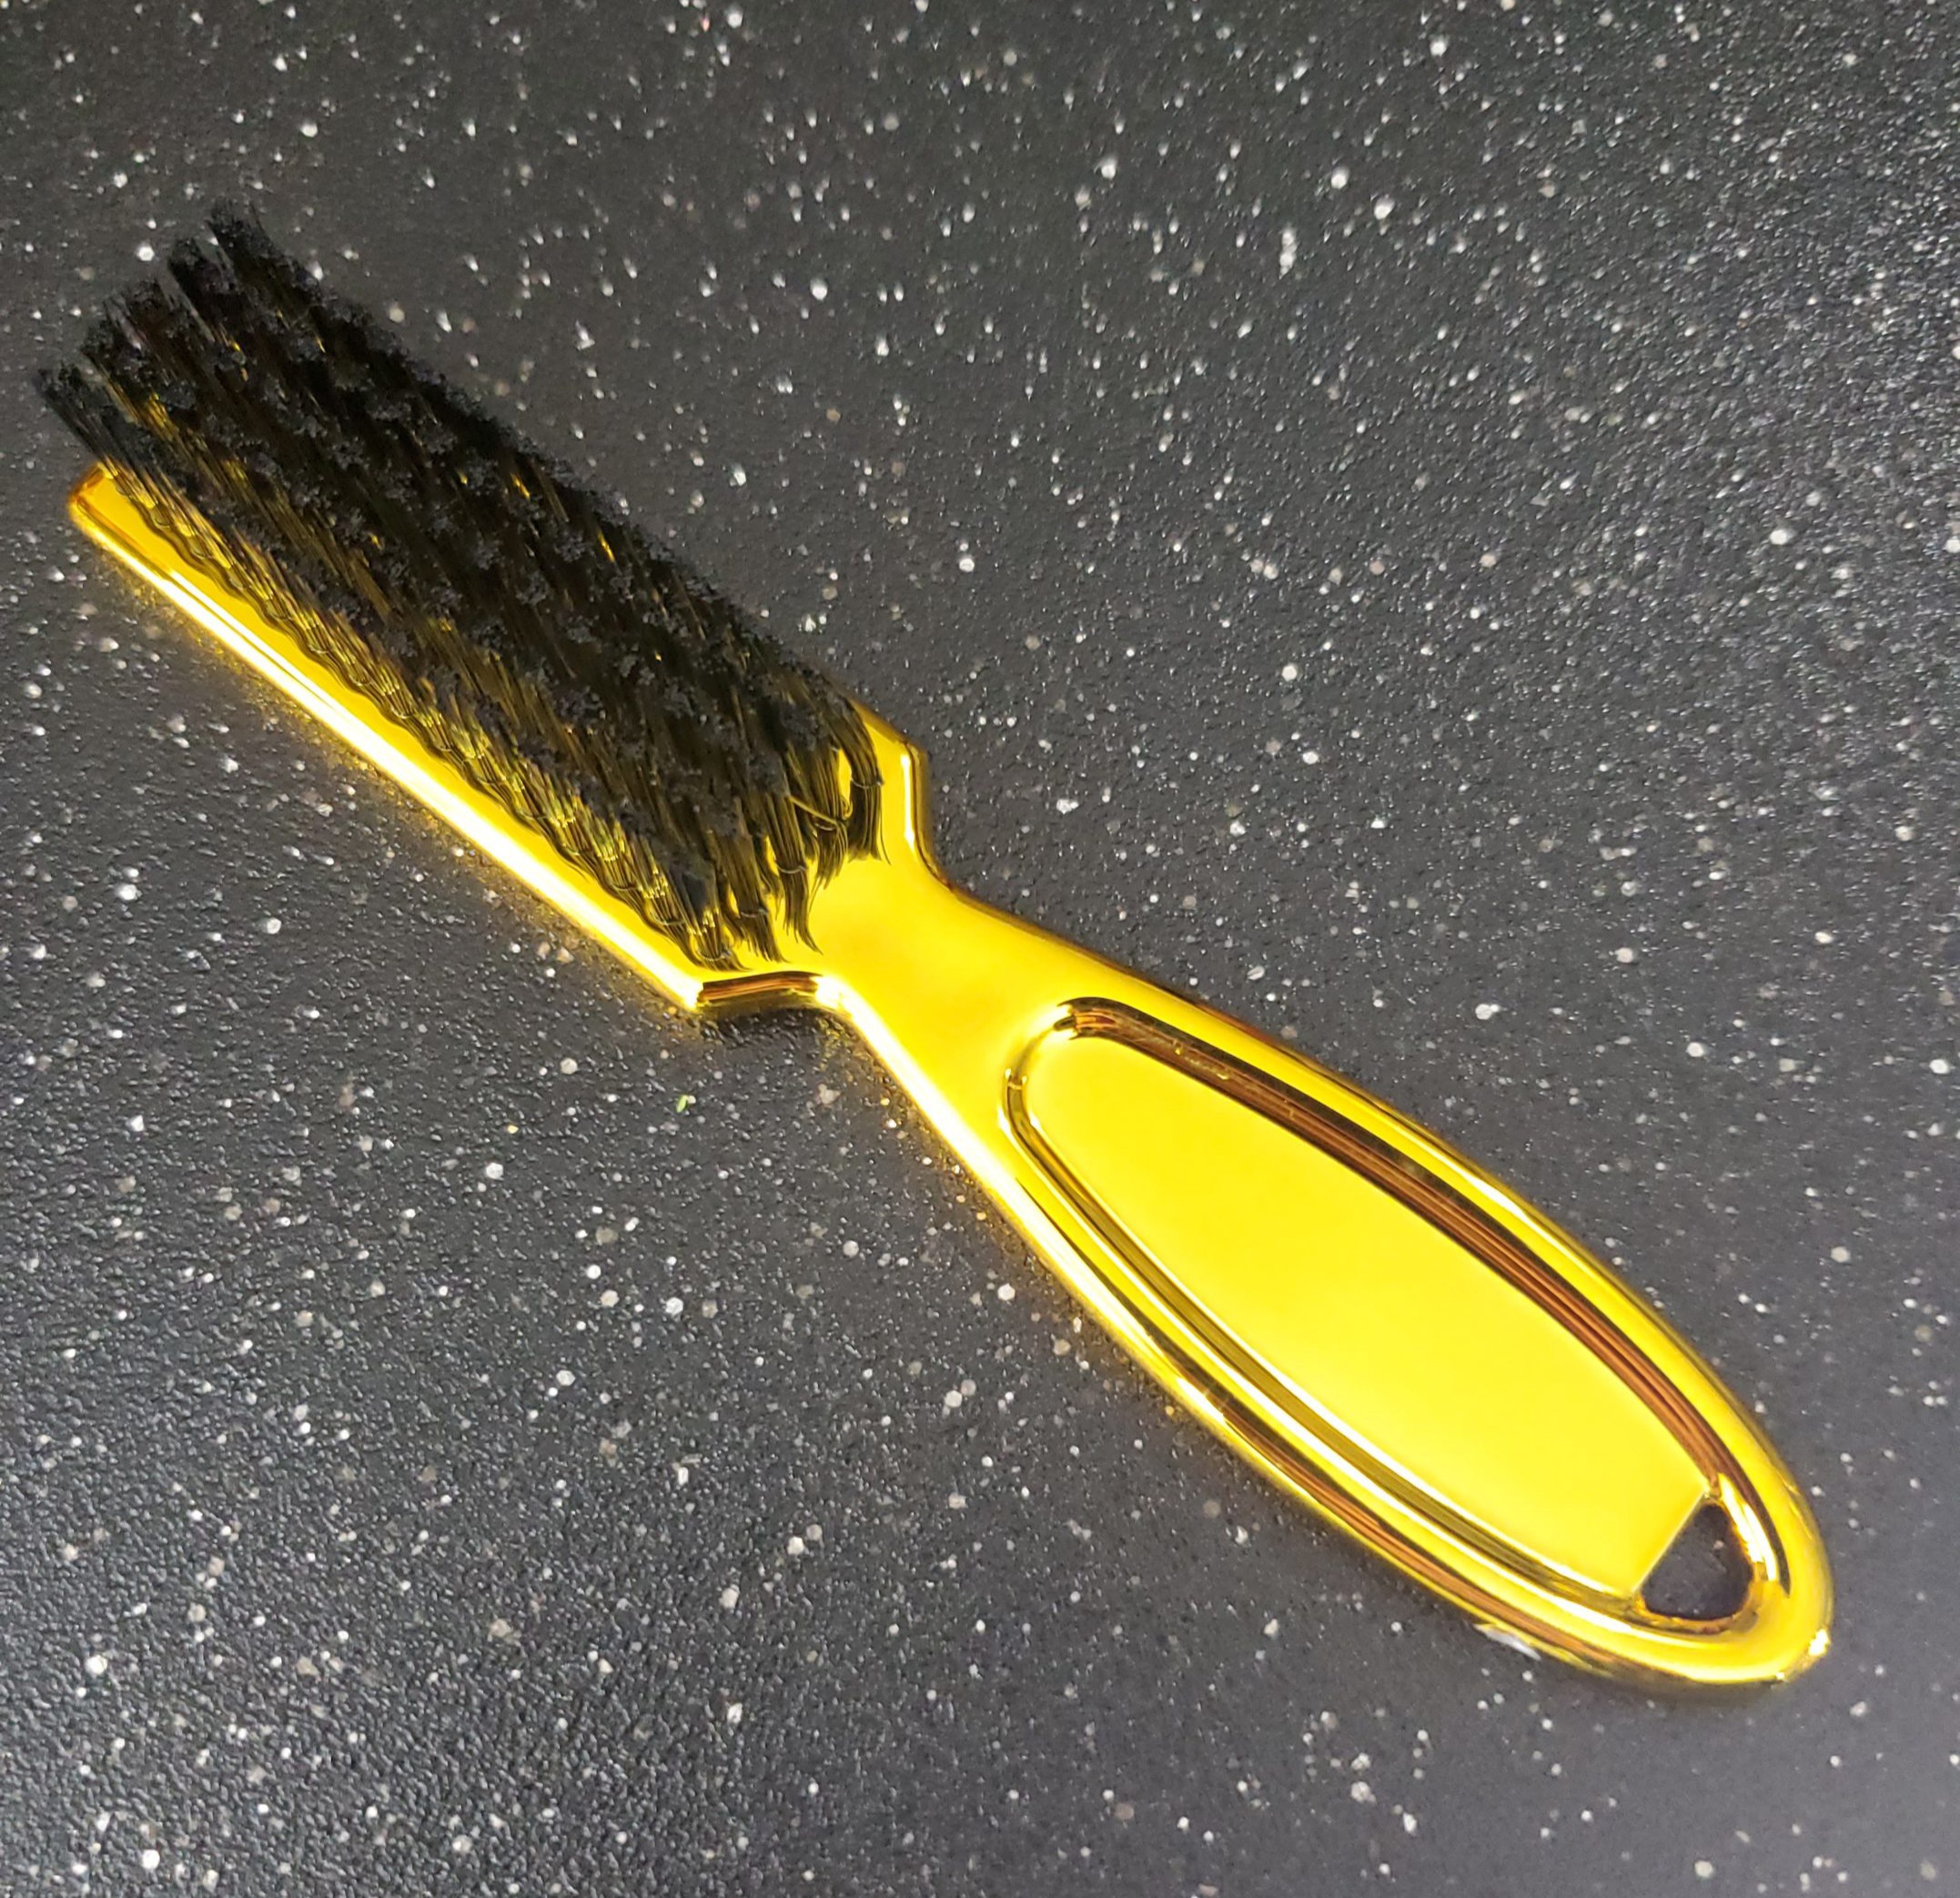 fade brush barber cleaning clipper 2 set gold – Elegant Barber Zone